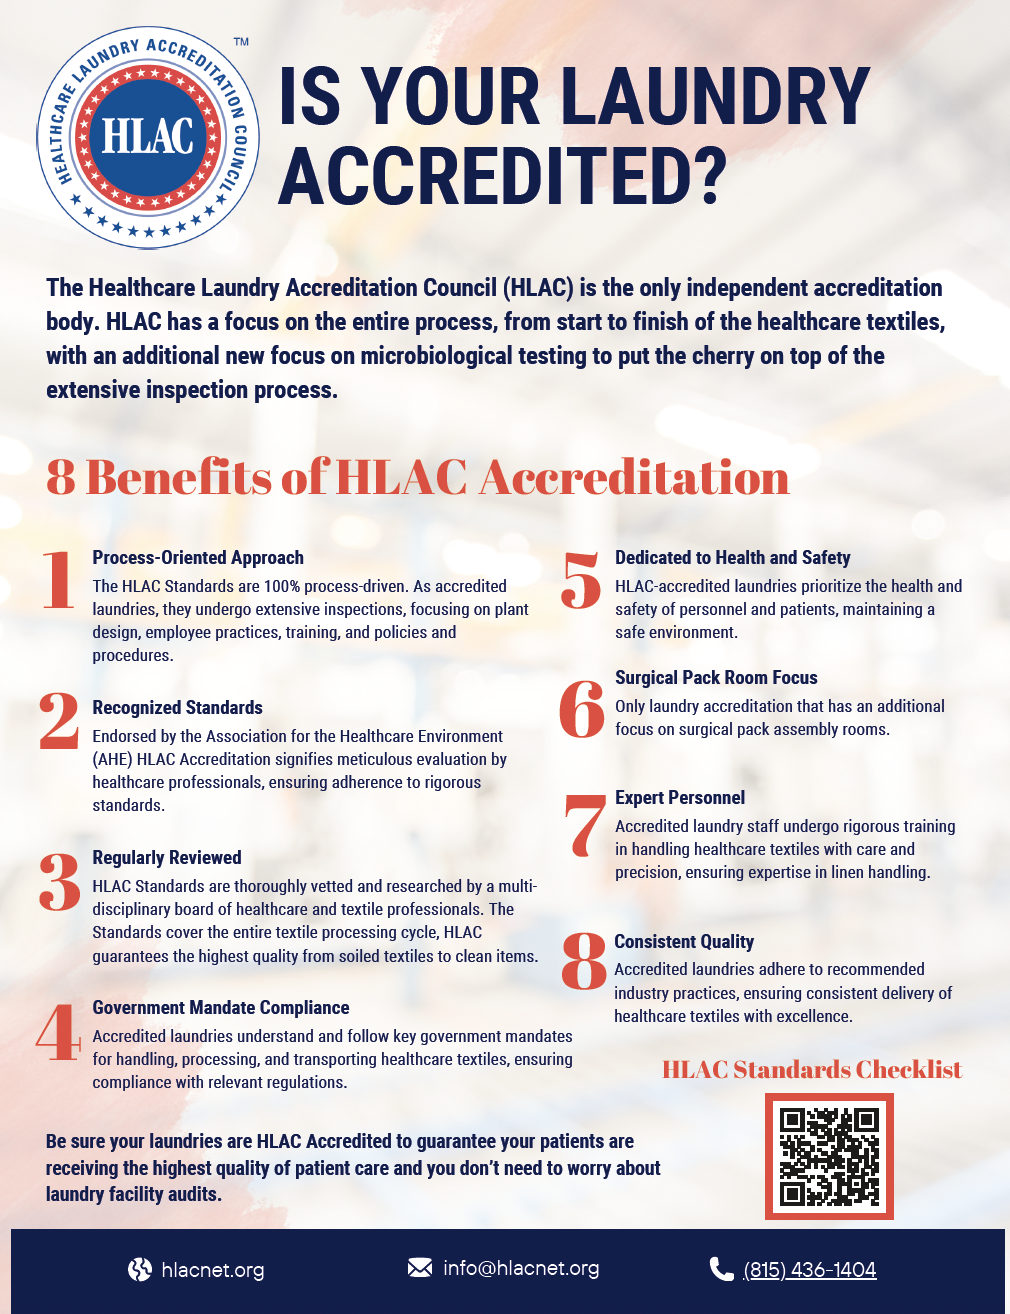 HLAC Accreditation Standards